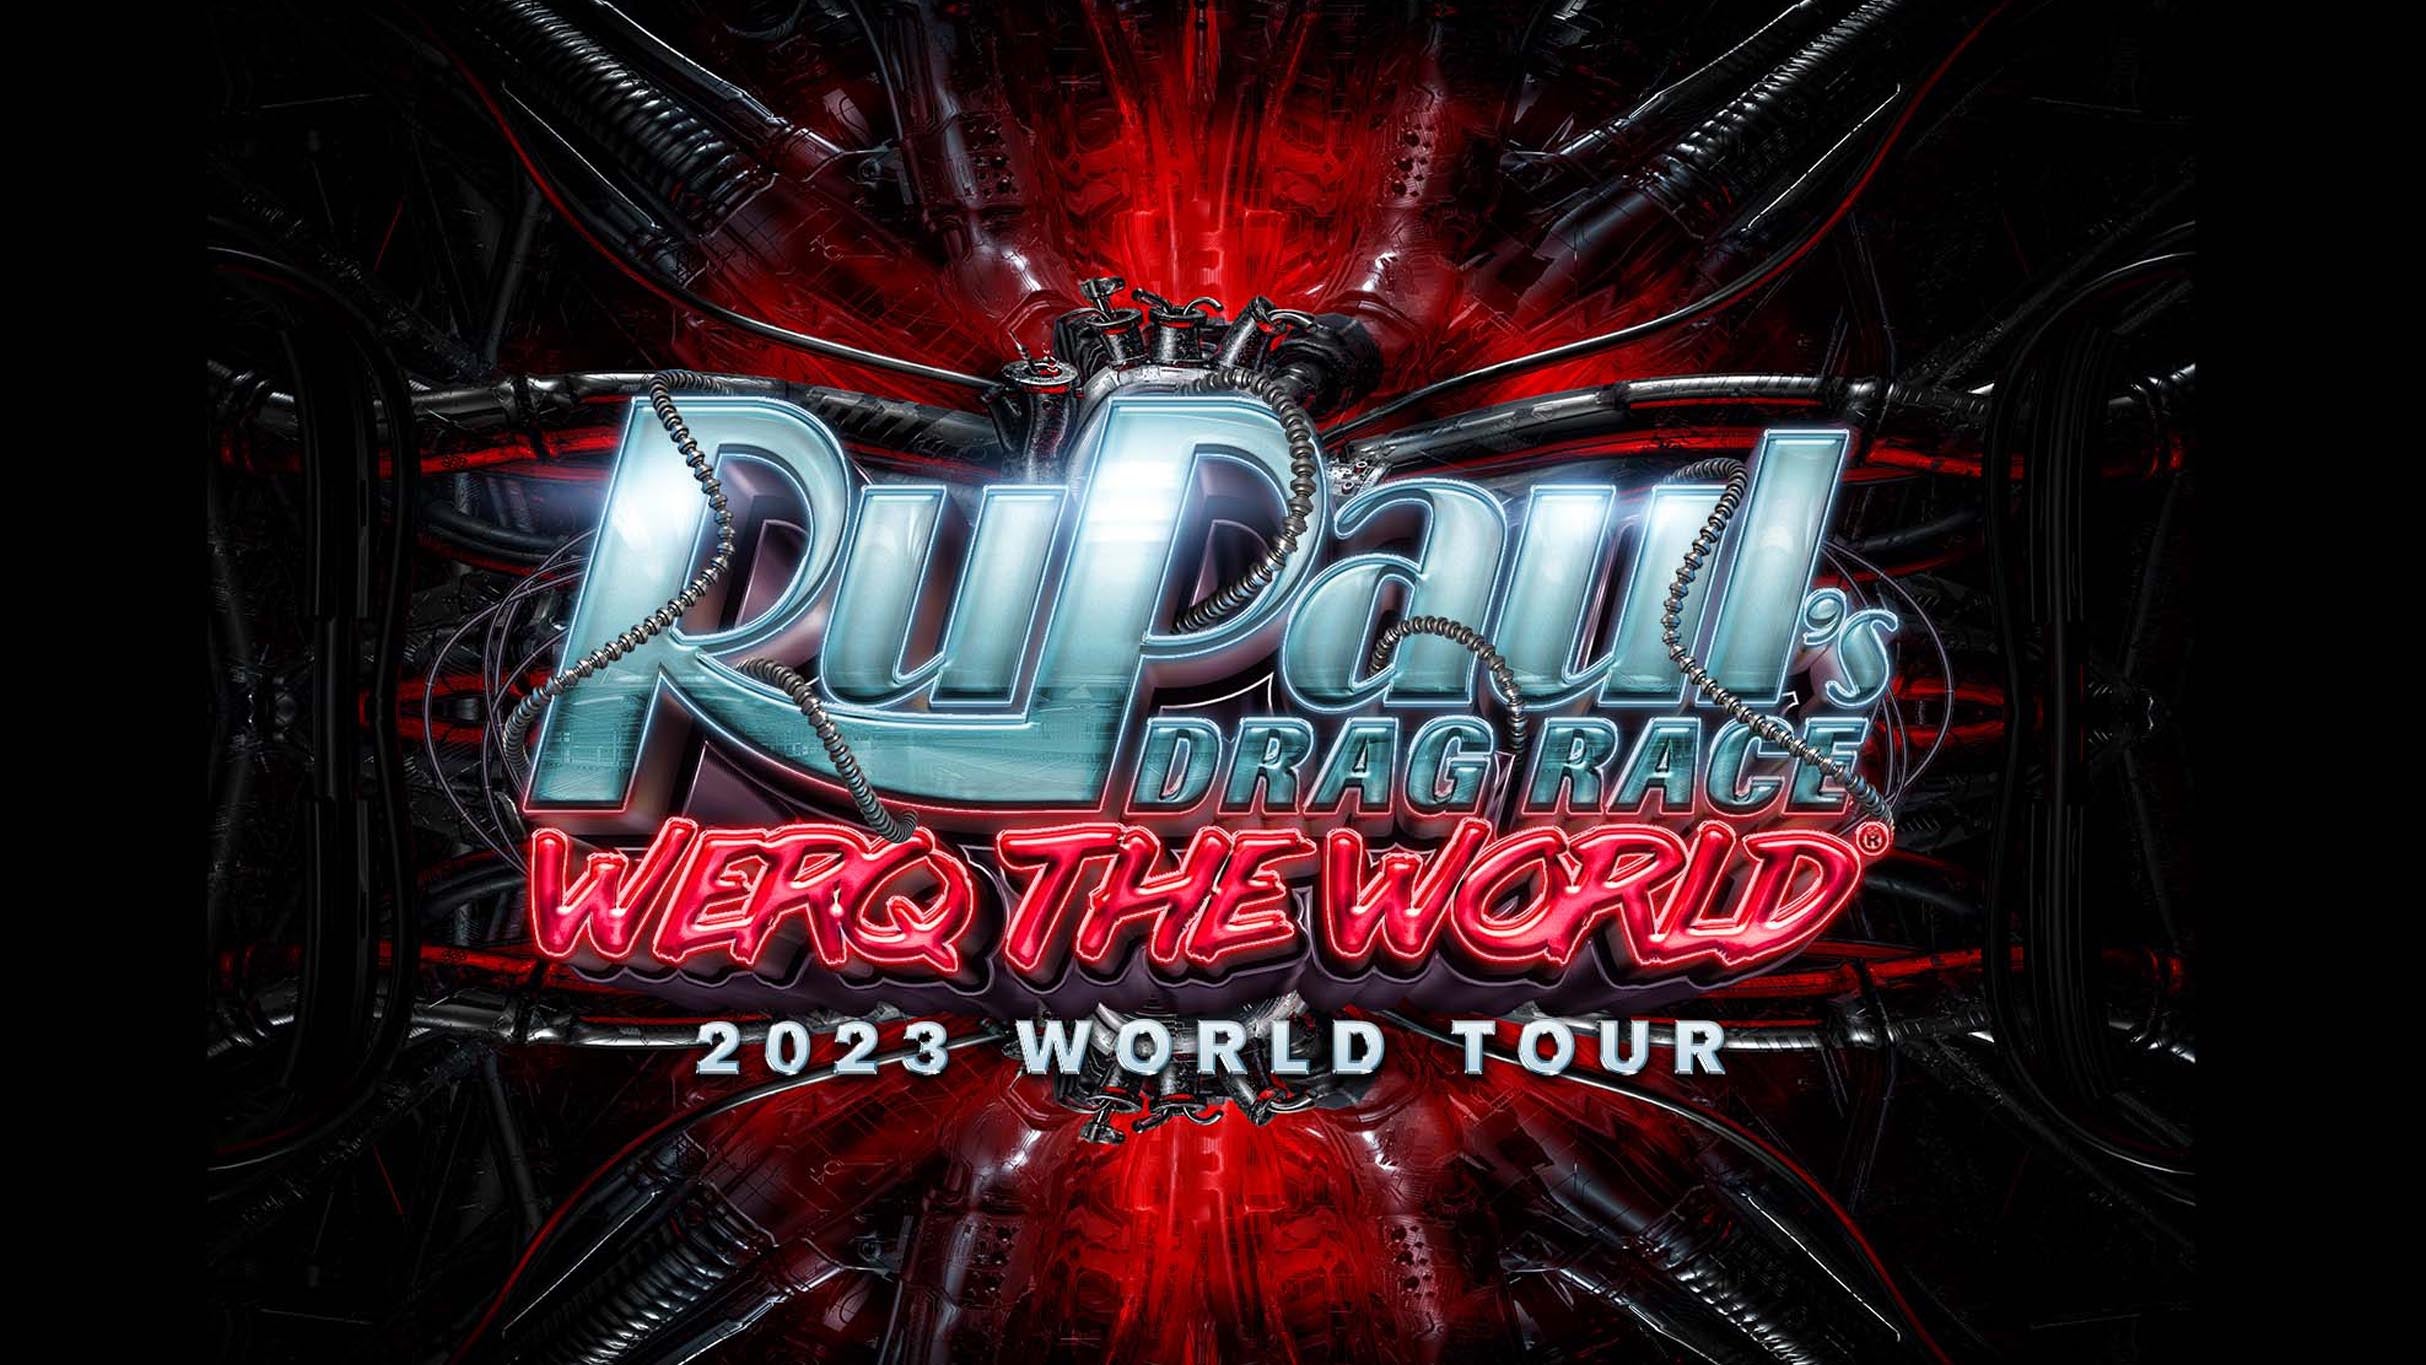 RuPauls Drag Race en Madrid – Werq The World Tour 2023